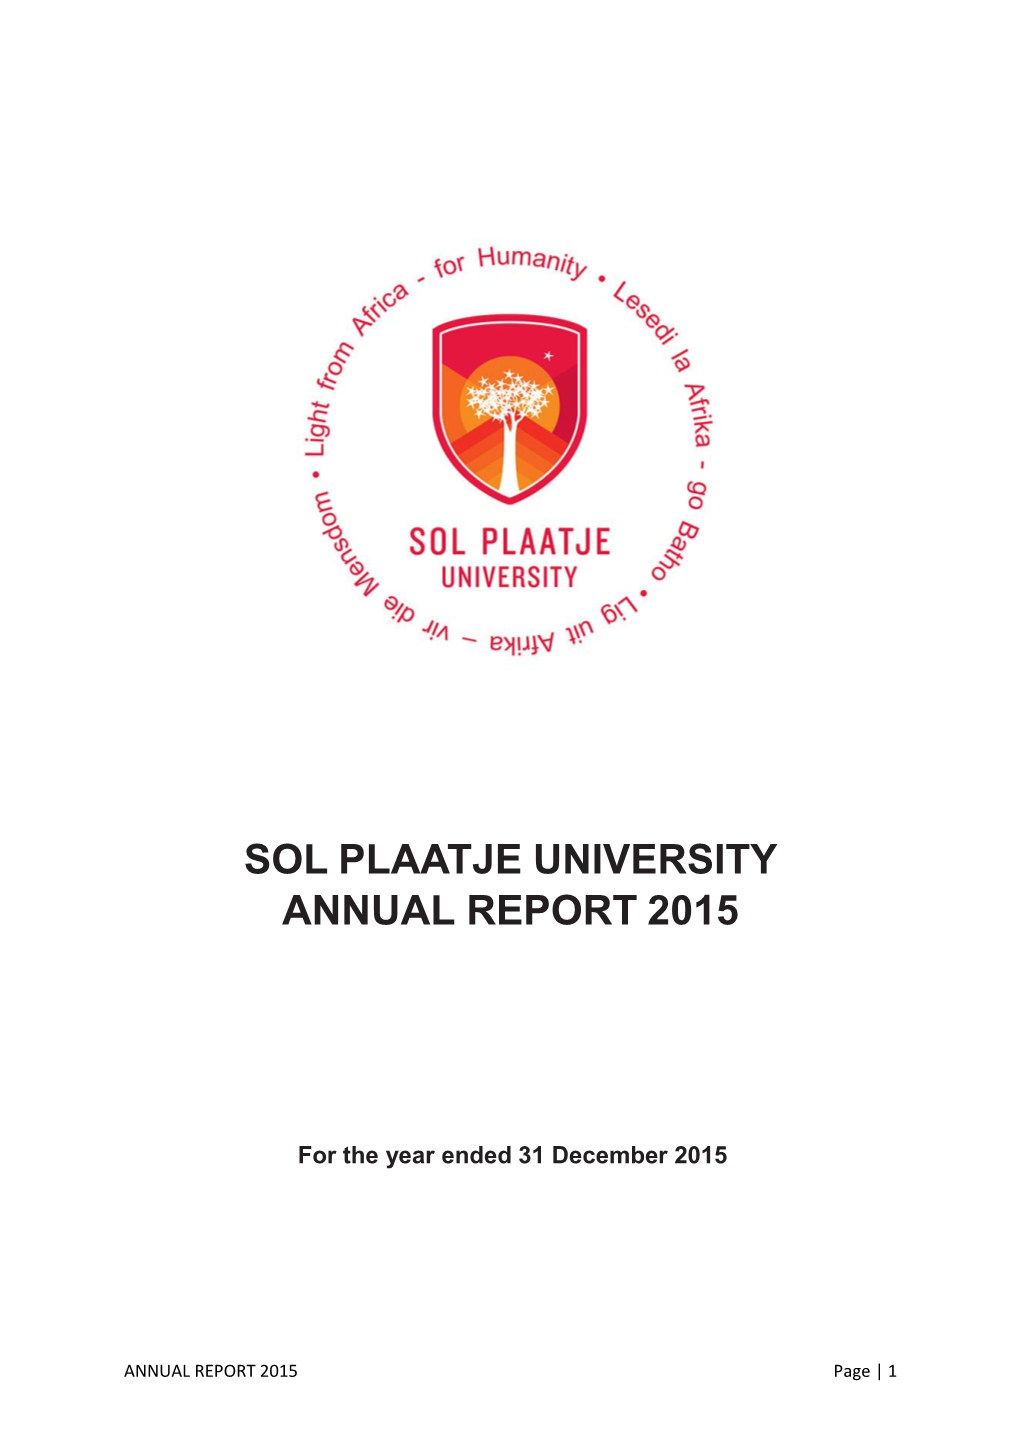 Sol Plaatje University Annual Report 2015